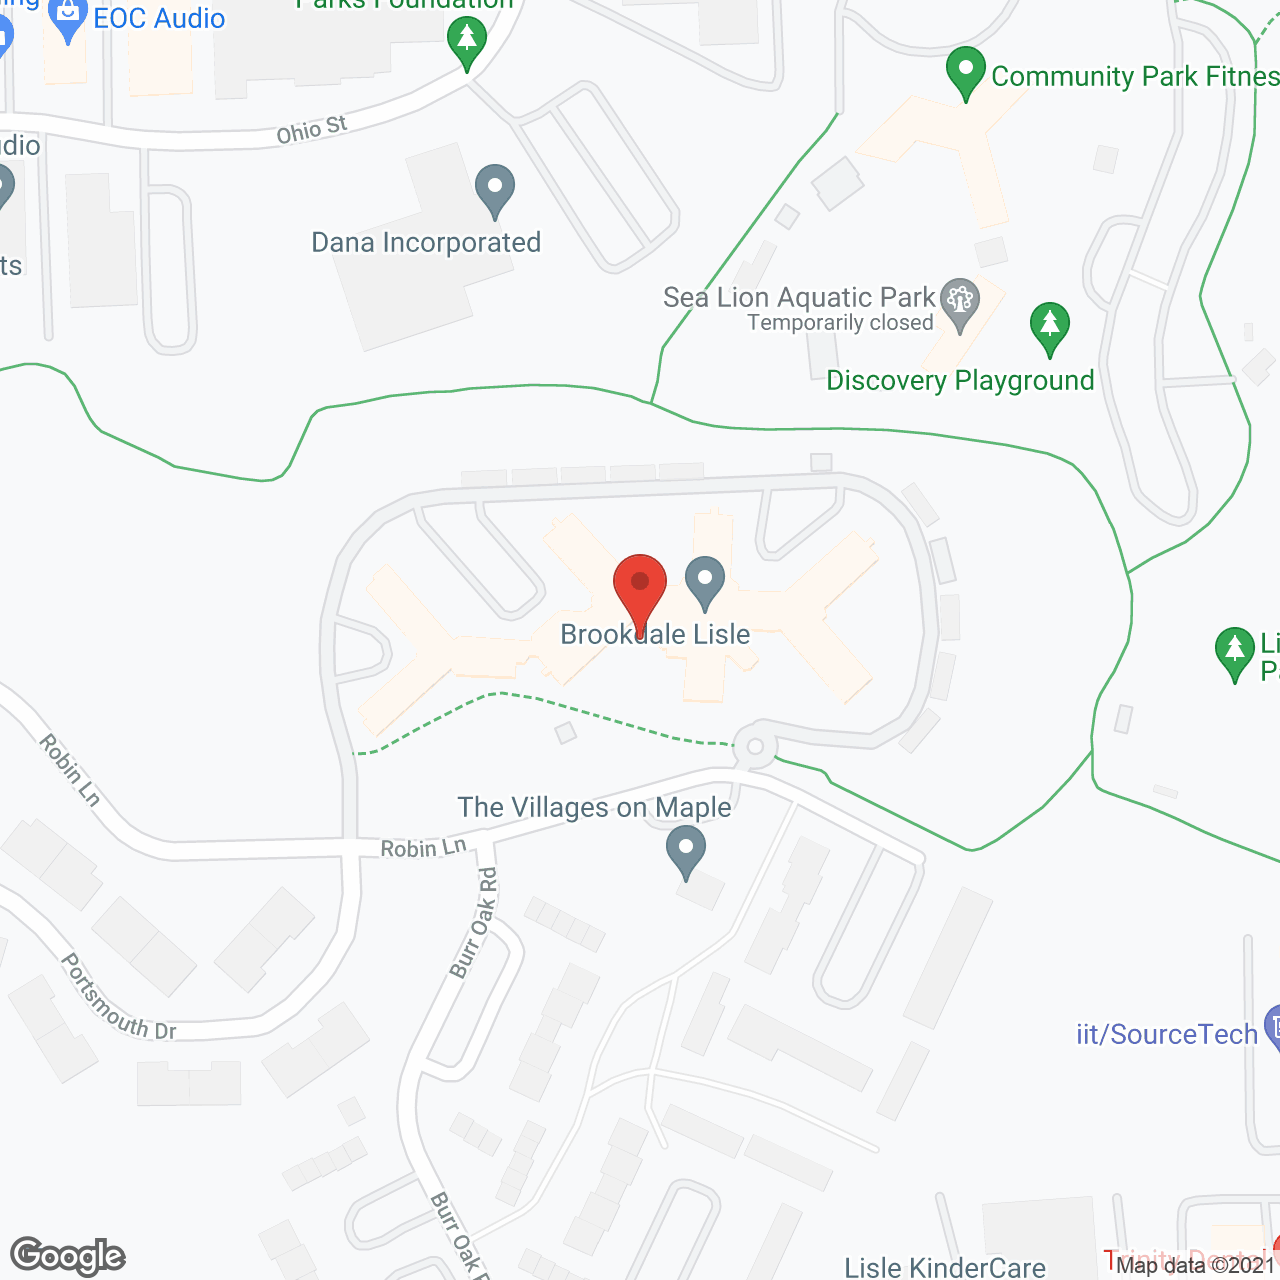 Brookdale Lisle in google map